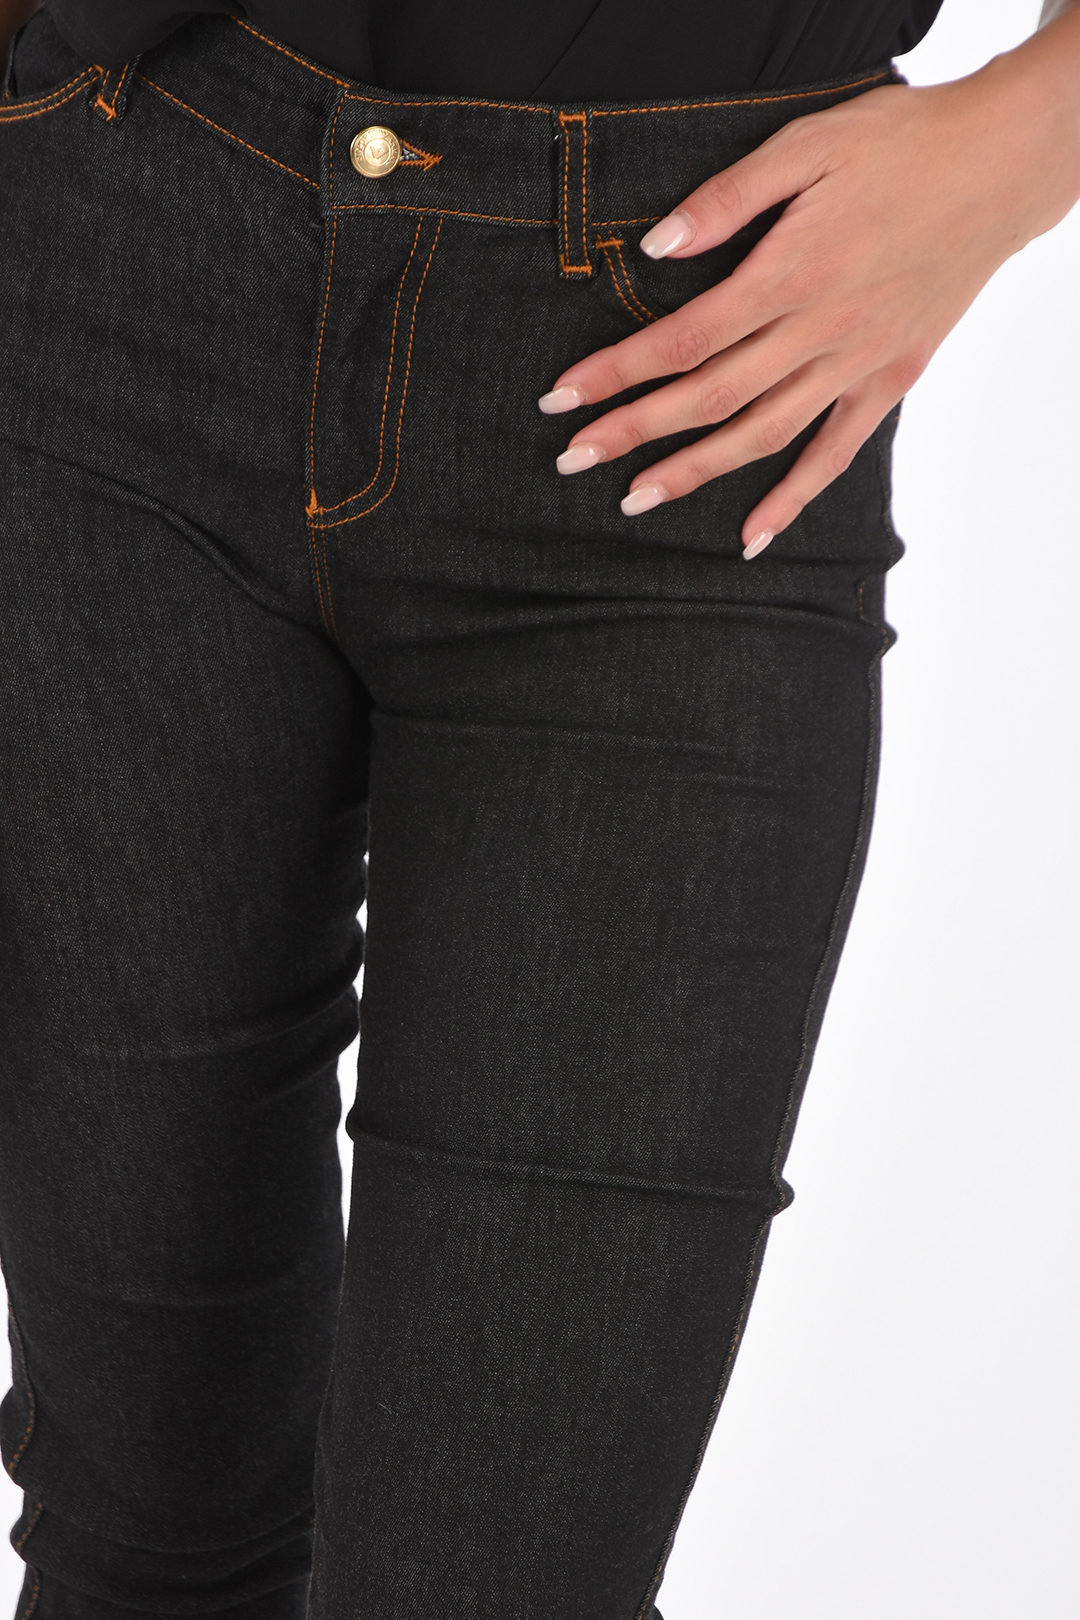 Armani EMPORIO Slim Fit 5 Pockets J18 Pants women - Glamood Outlet